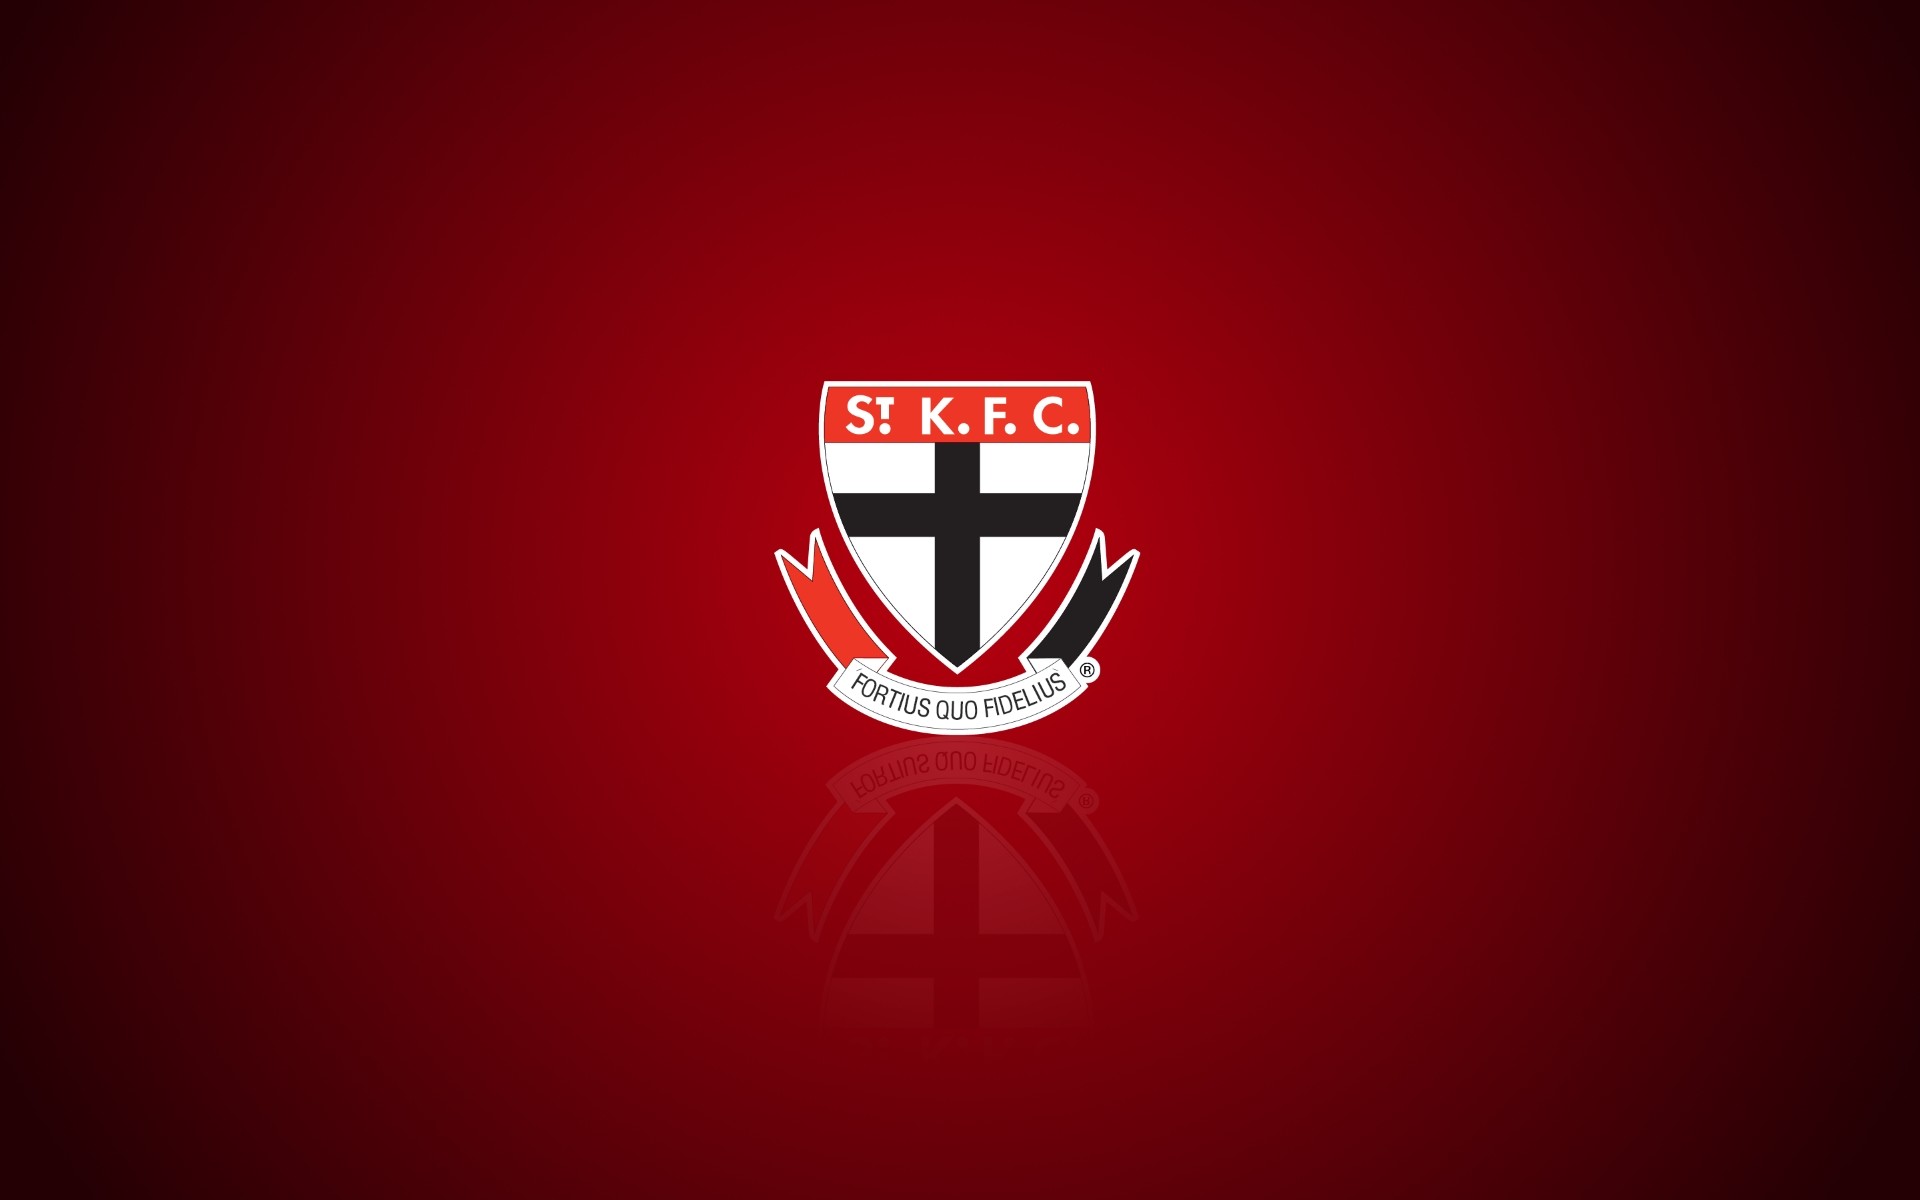 1920x1200 St Kilda Saints wallpaper, background with team logo - px